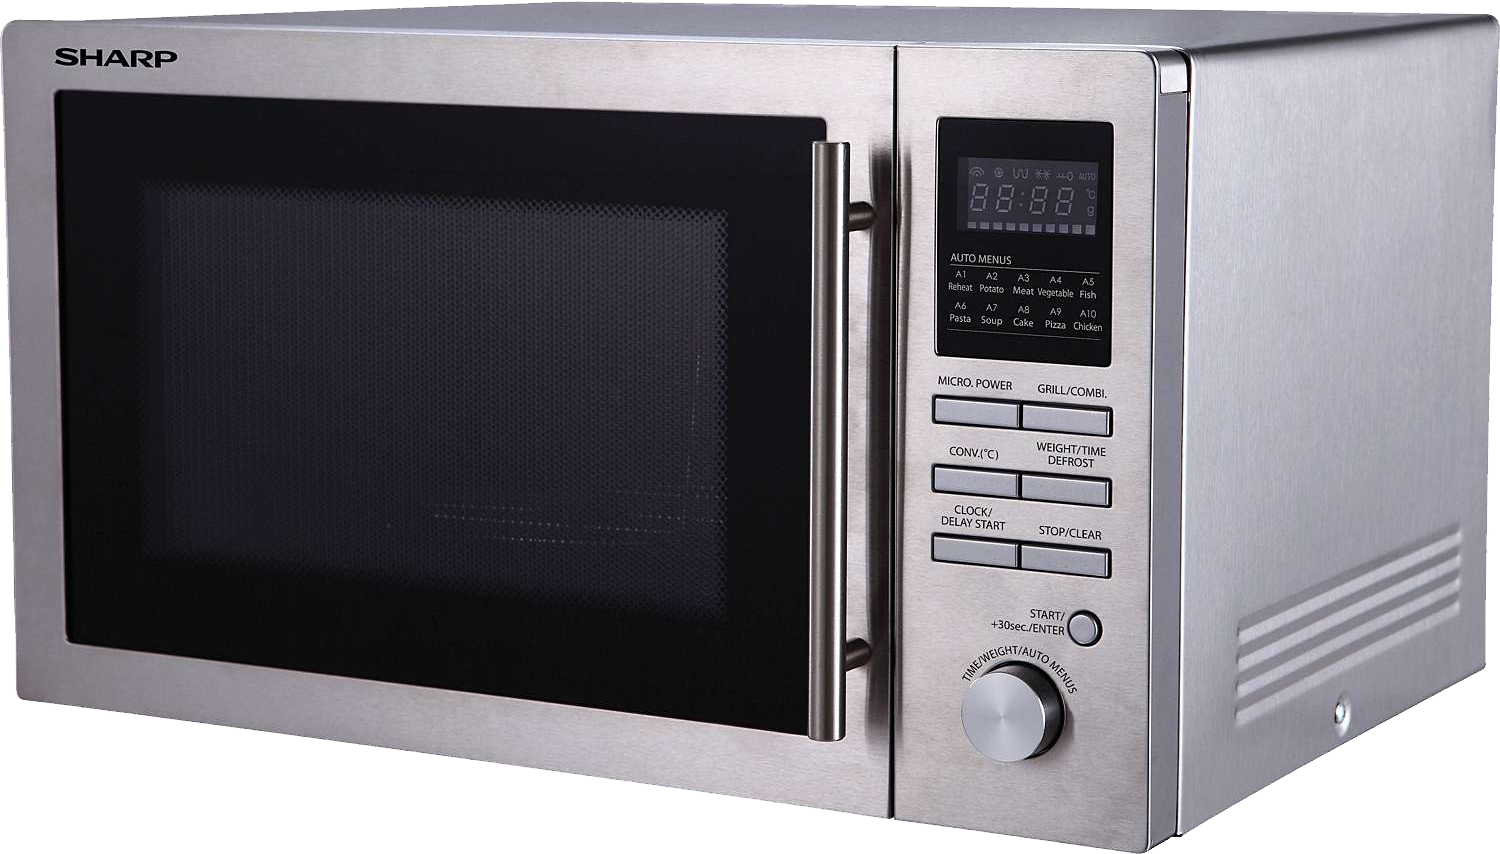 Gambar latar belakang oven microwave